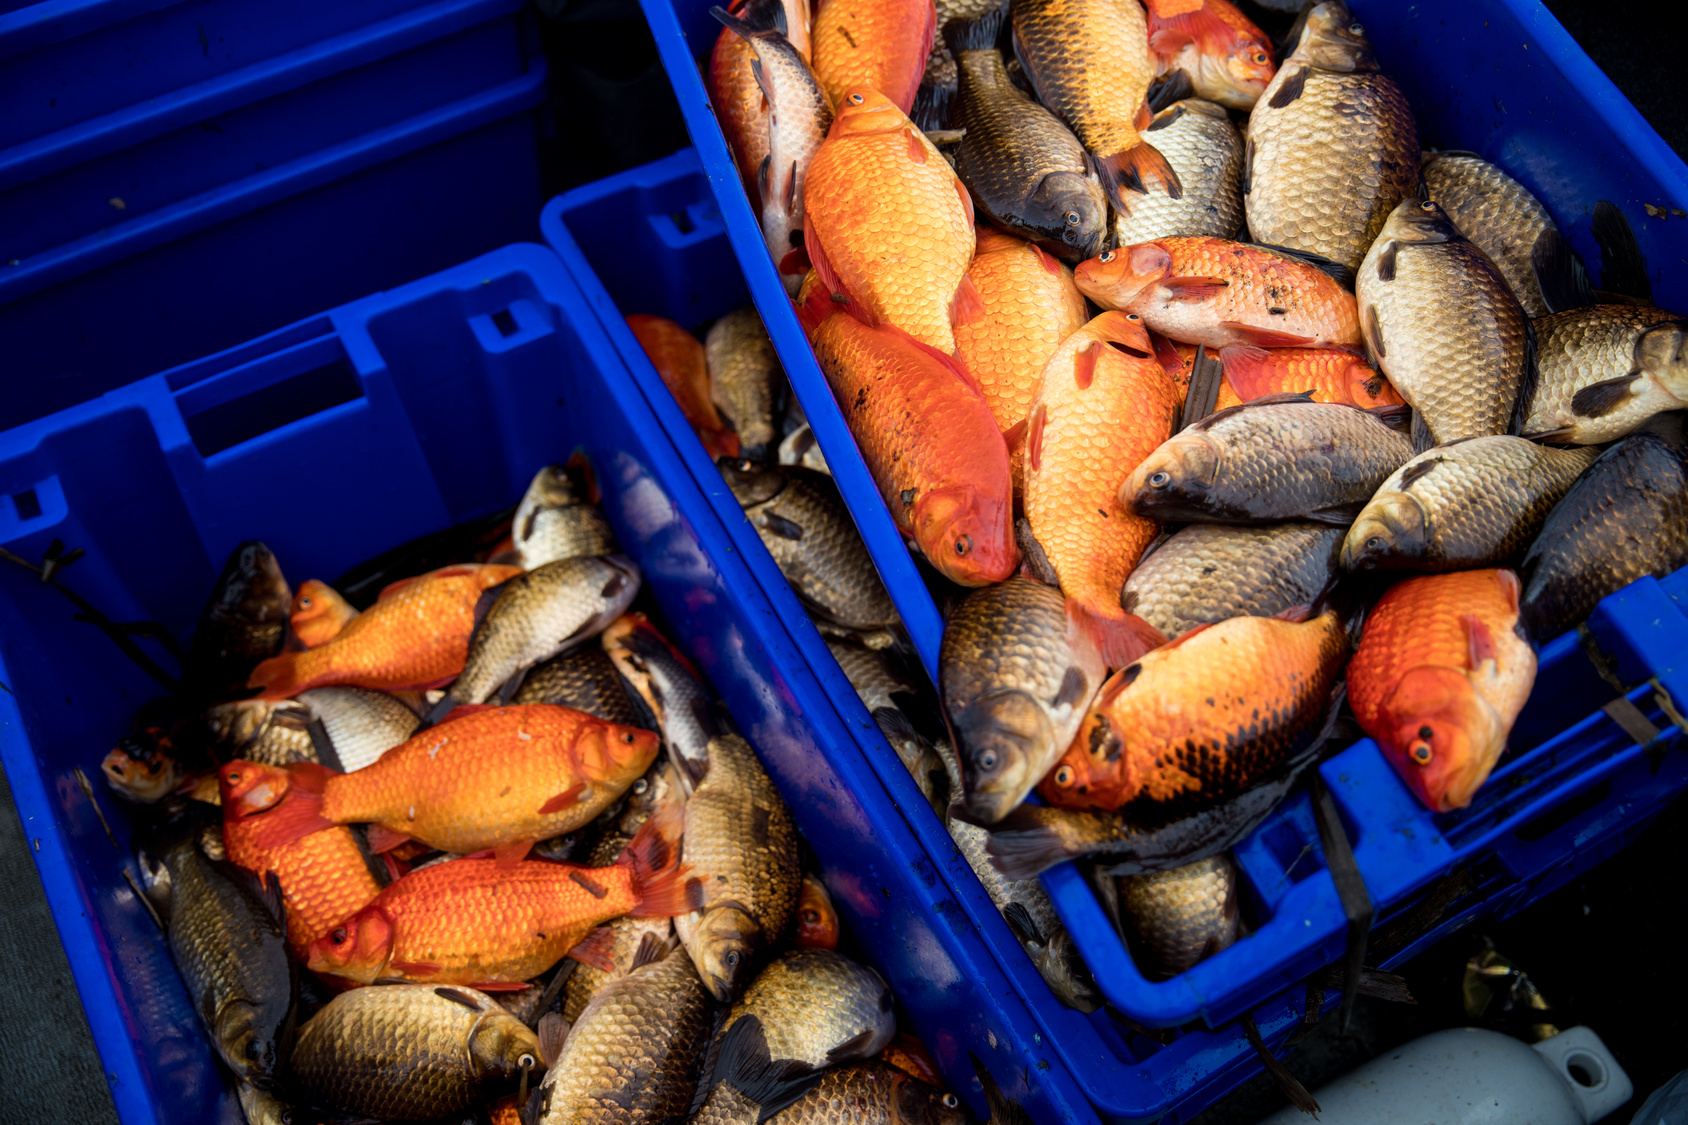 Crates of invasive goldfish taken from BC lakes